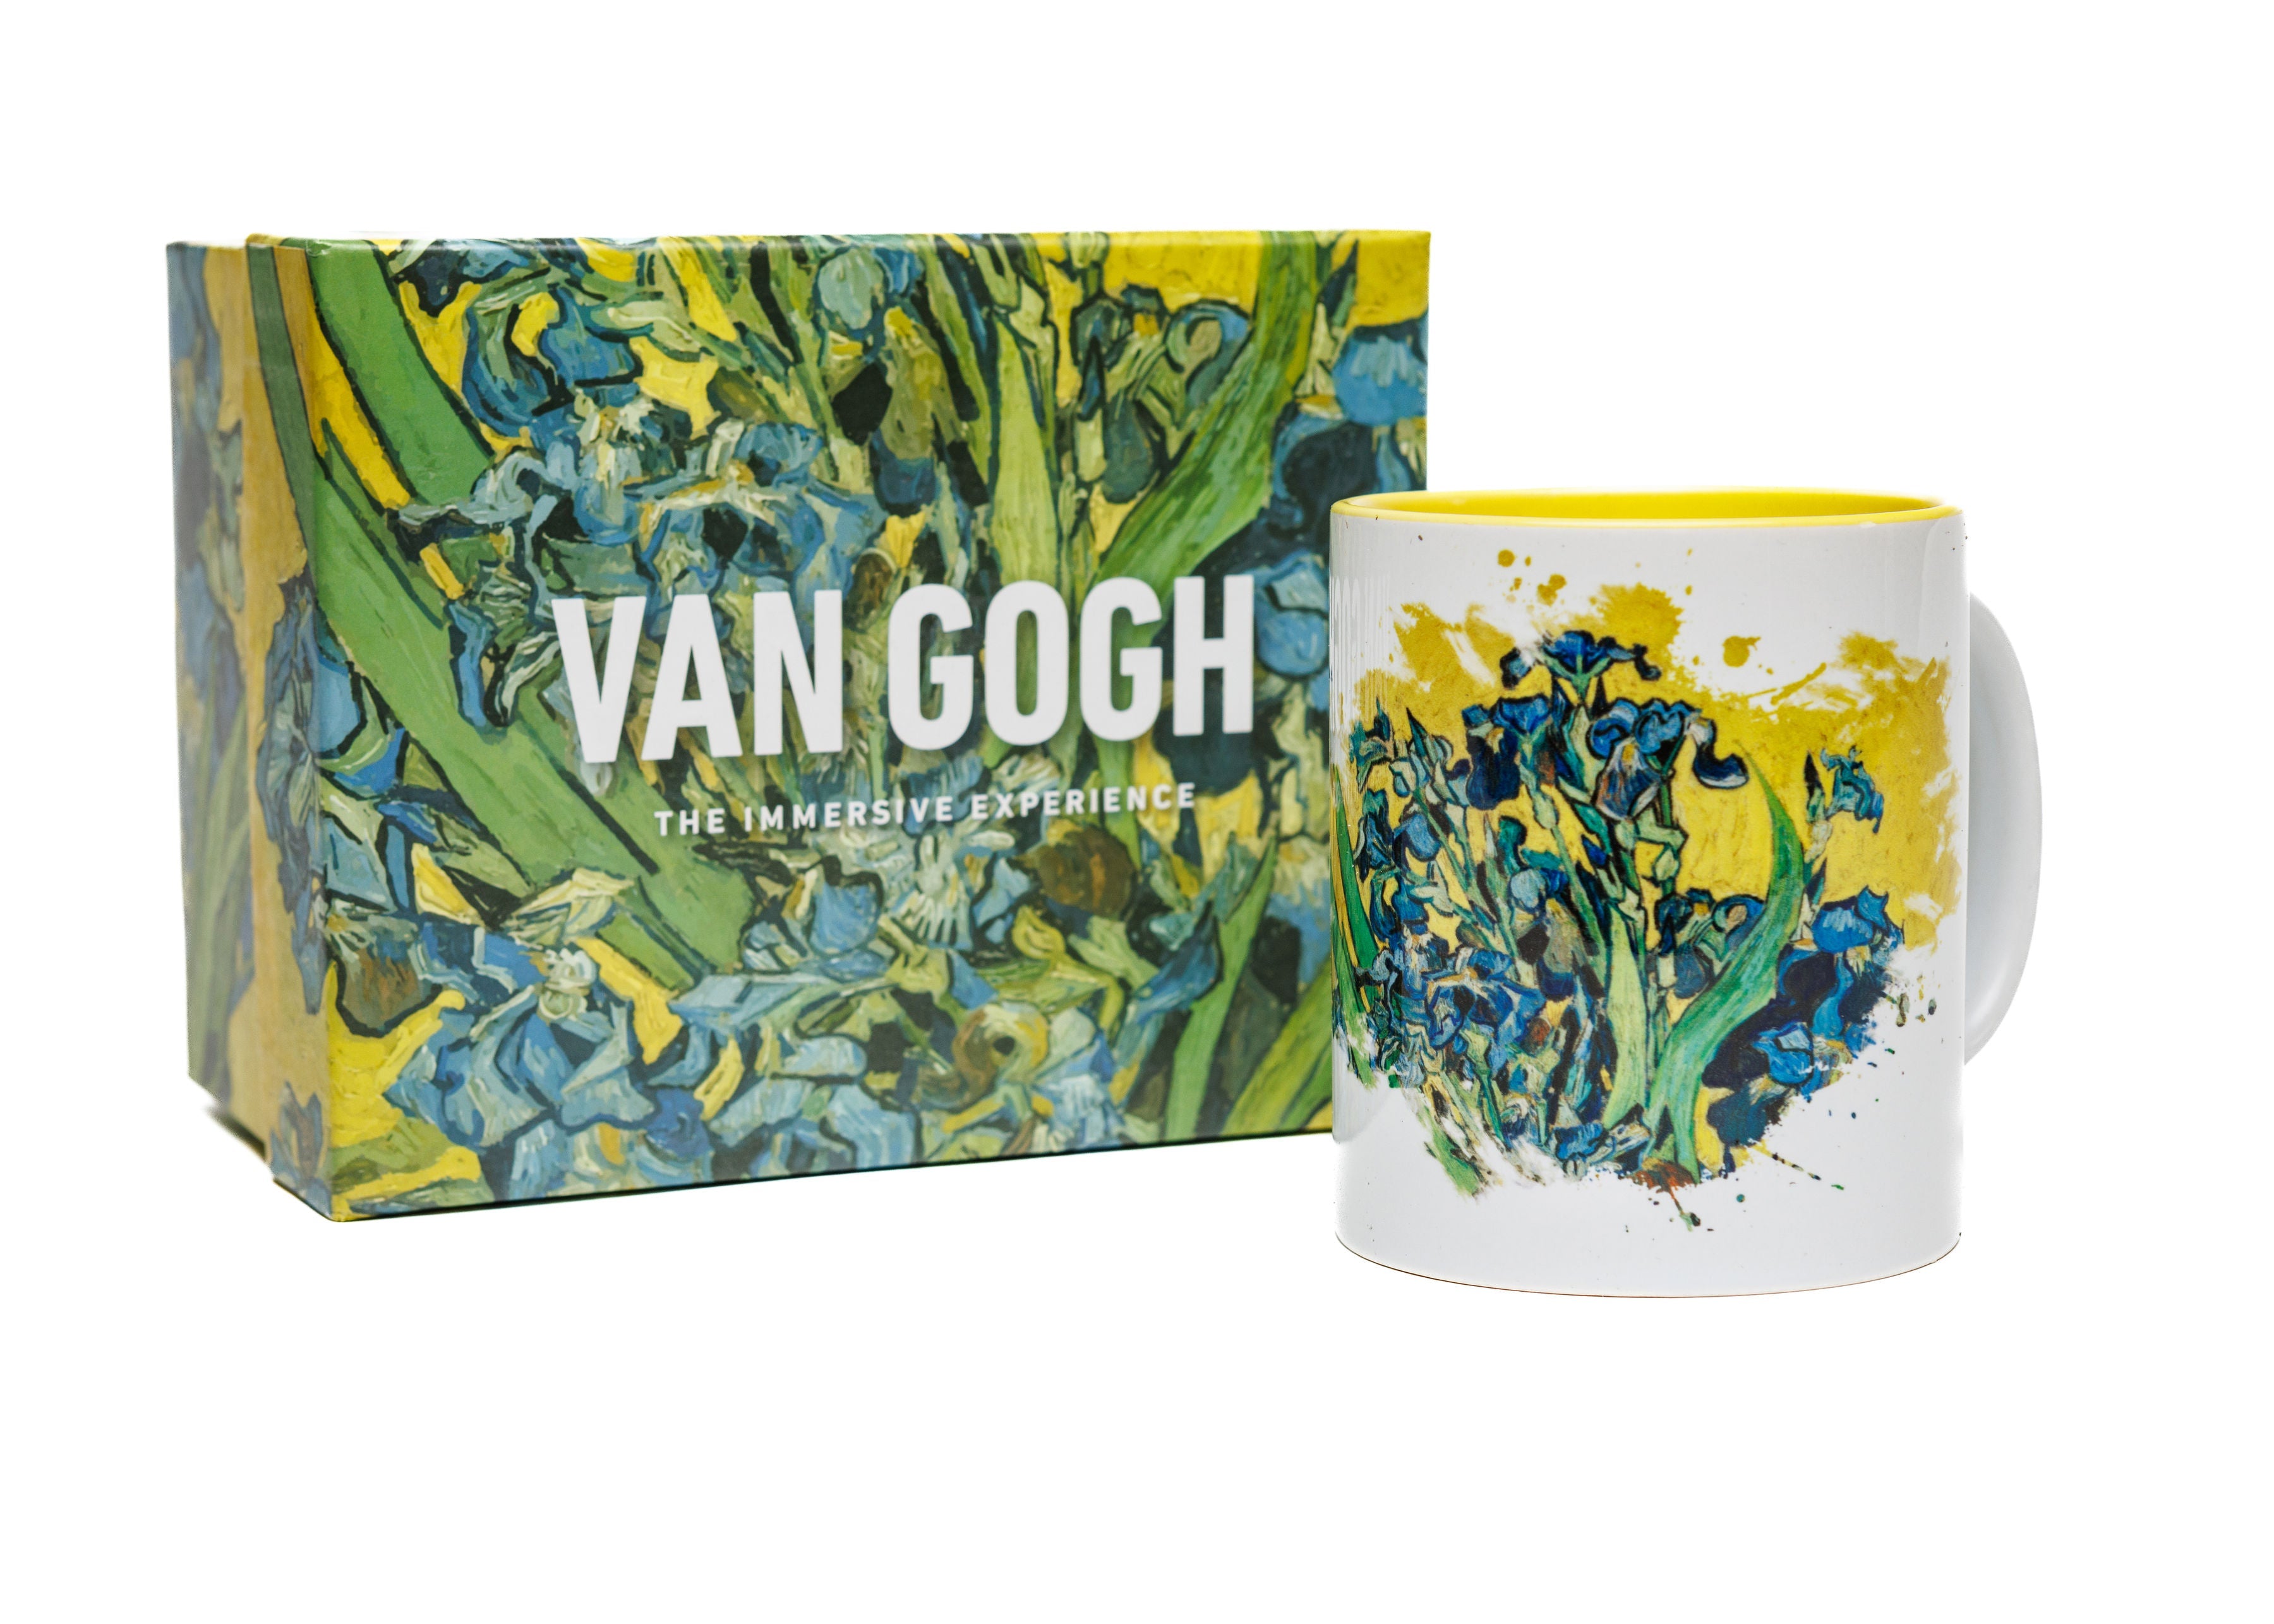 VanGogh #mug #promotionalitems #merchandising #madeinsadesign #VanGoghAlive  #promotion Discover more about